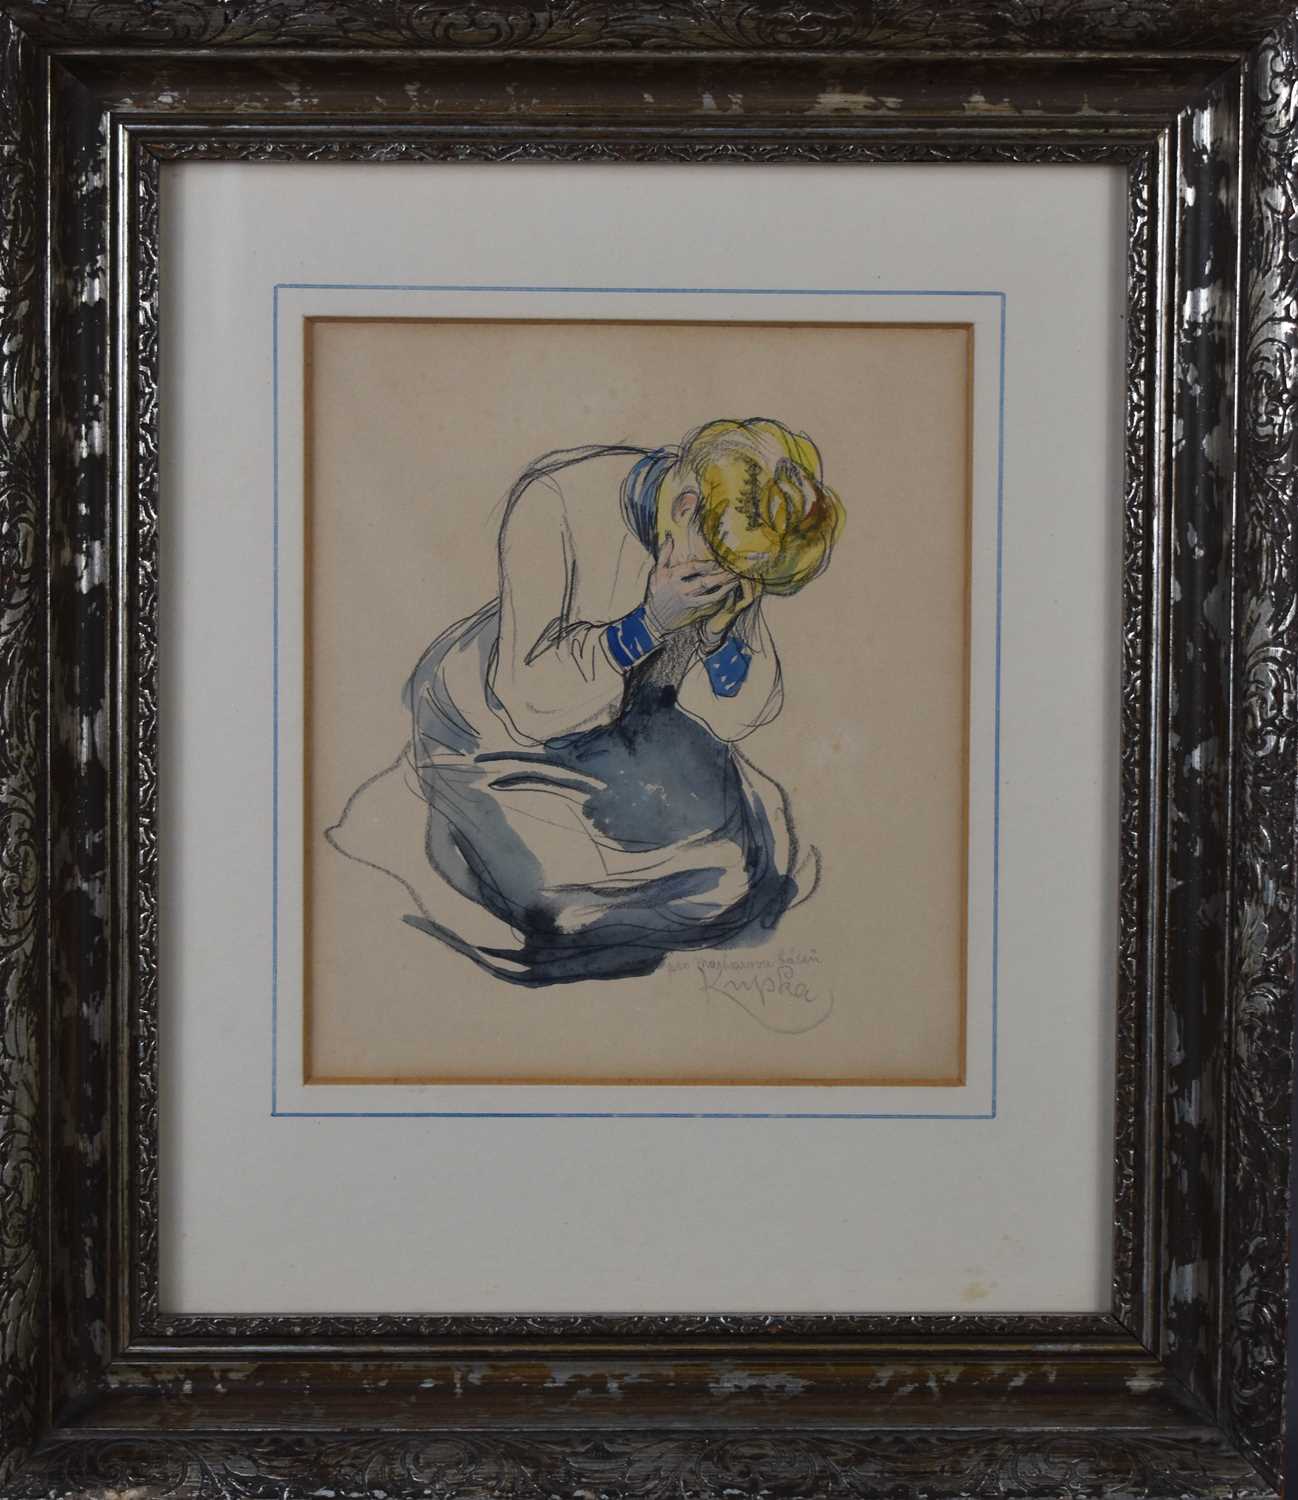 František KUPKA (Czech, 1871-1957) Kneeling Female Figure watercolour and crayon on paper, signed